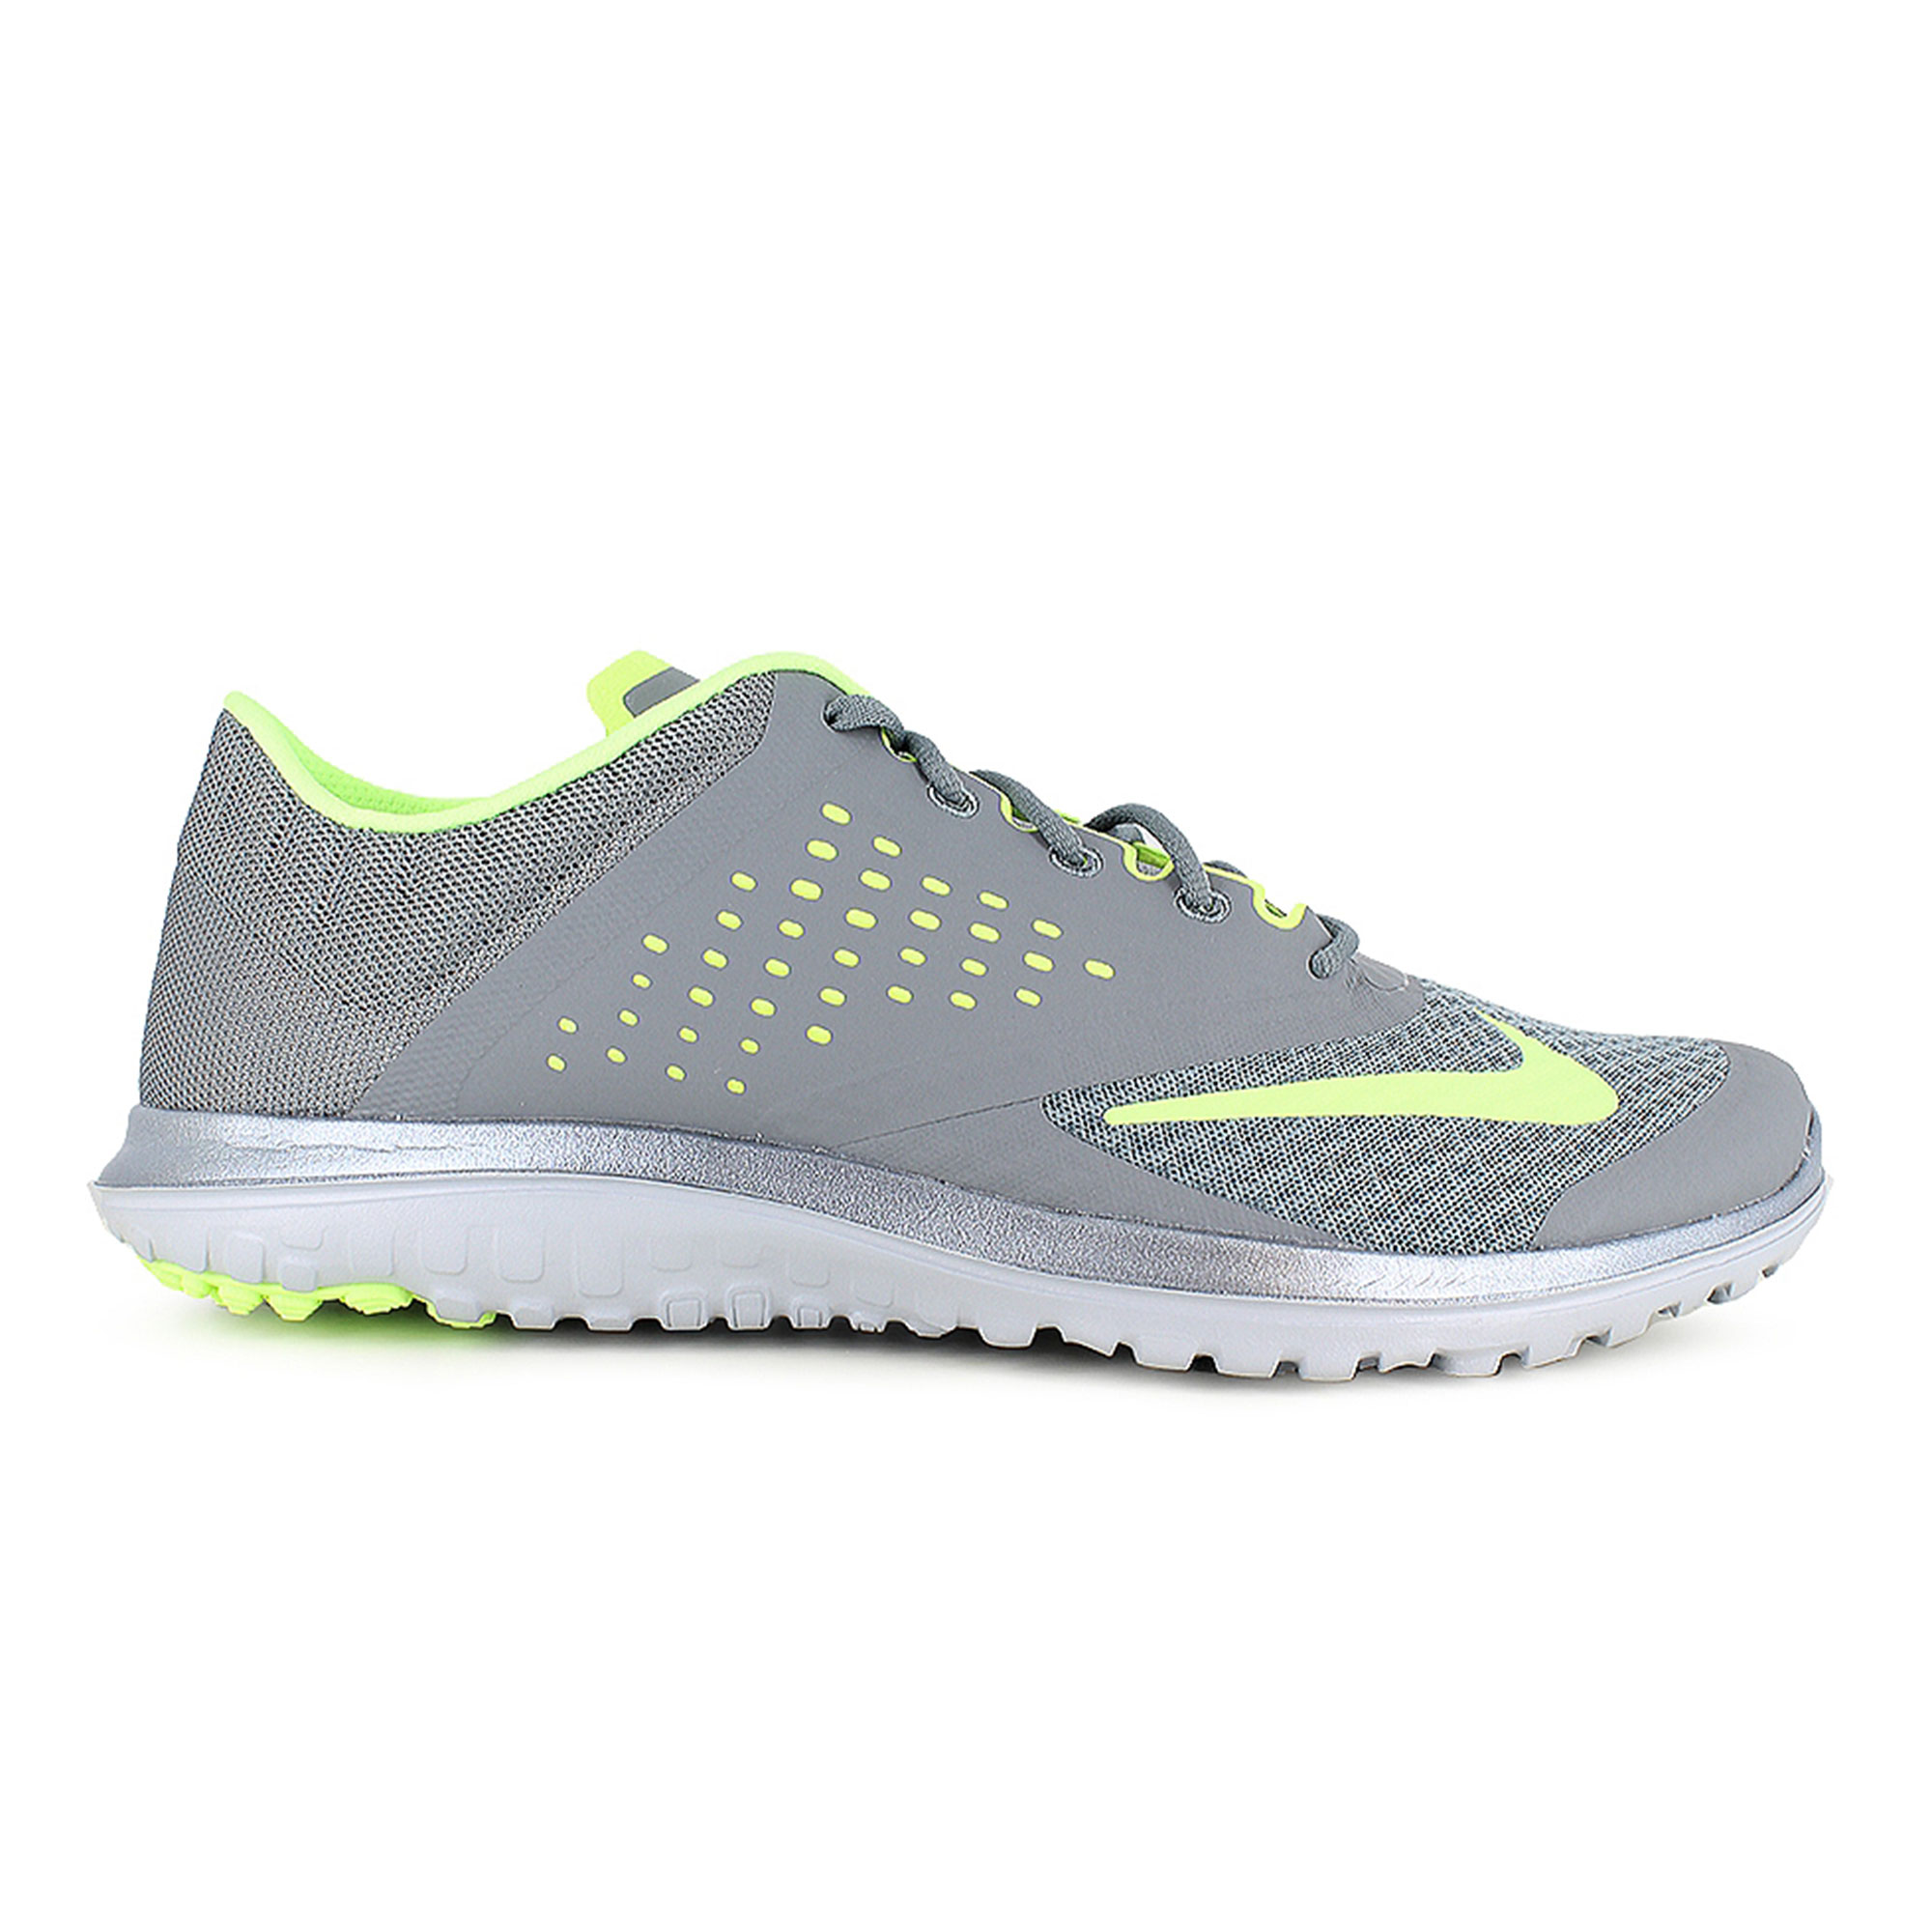 Men's Nike Fs Lite Run 2 Running Shoes 